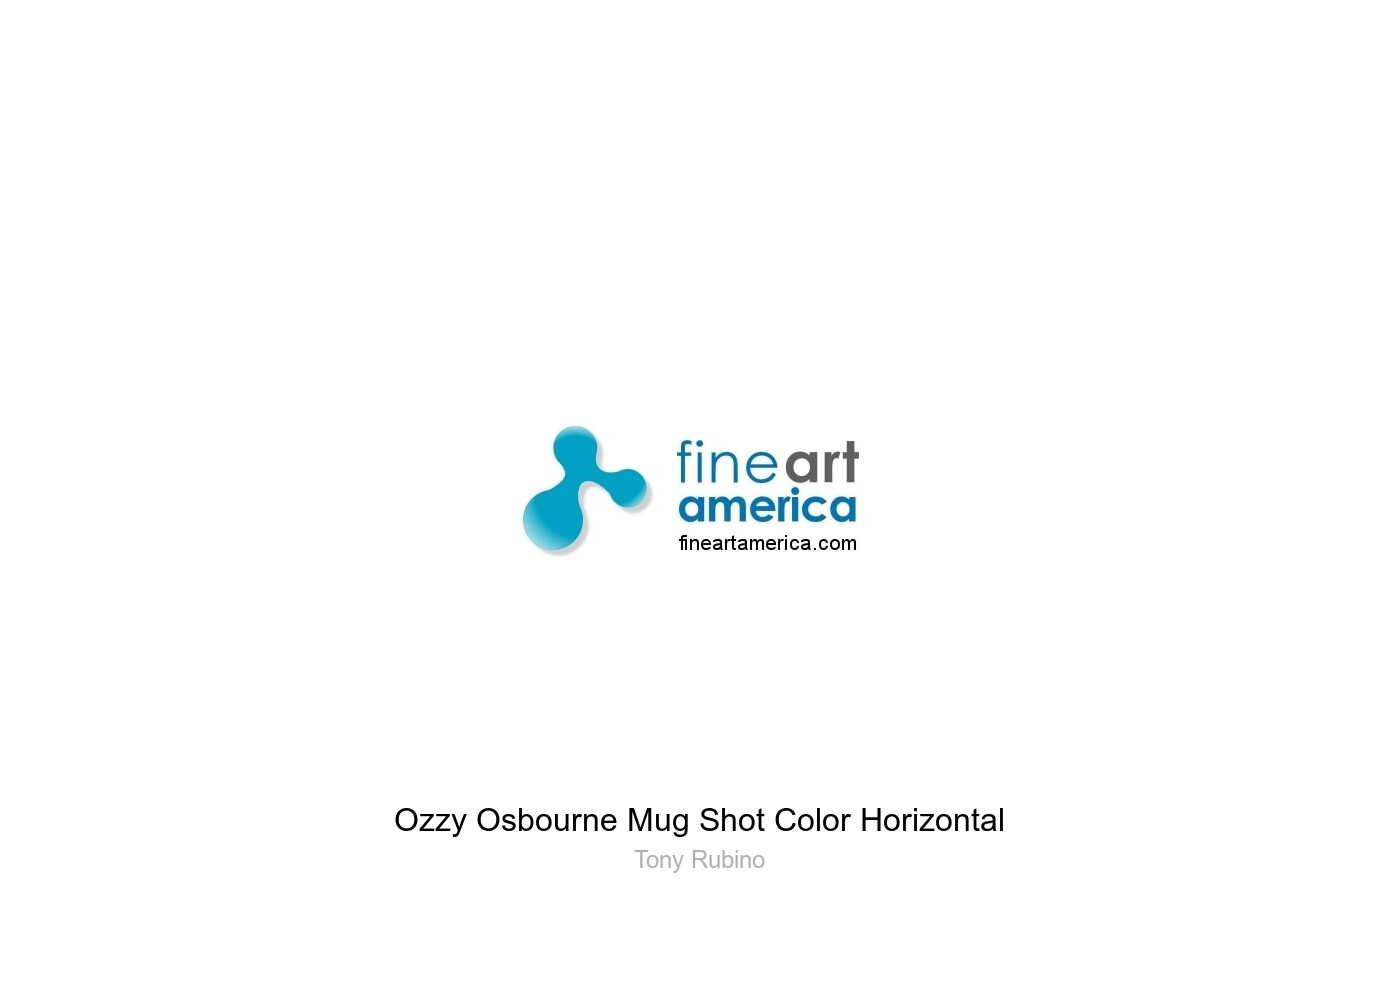 Ozzy Osbourne Mug Shot Color Horizontal Photograph by Tony Rubino